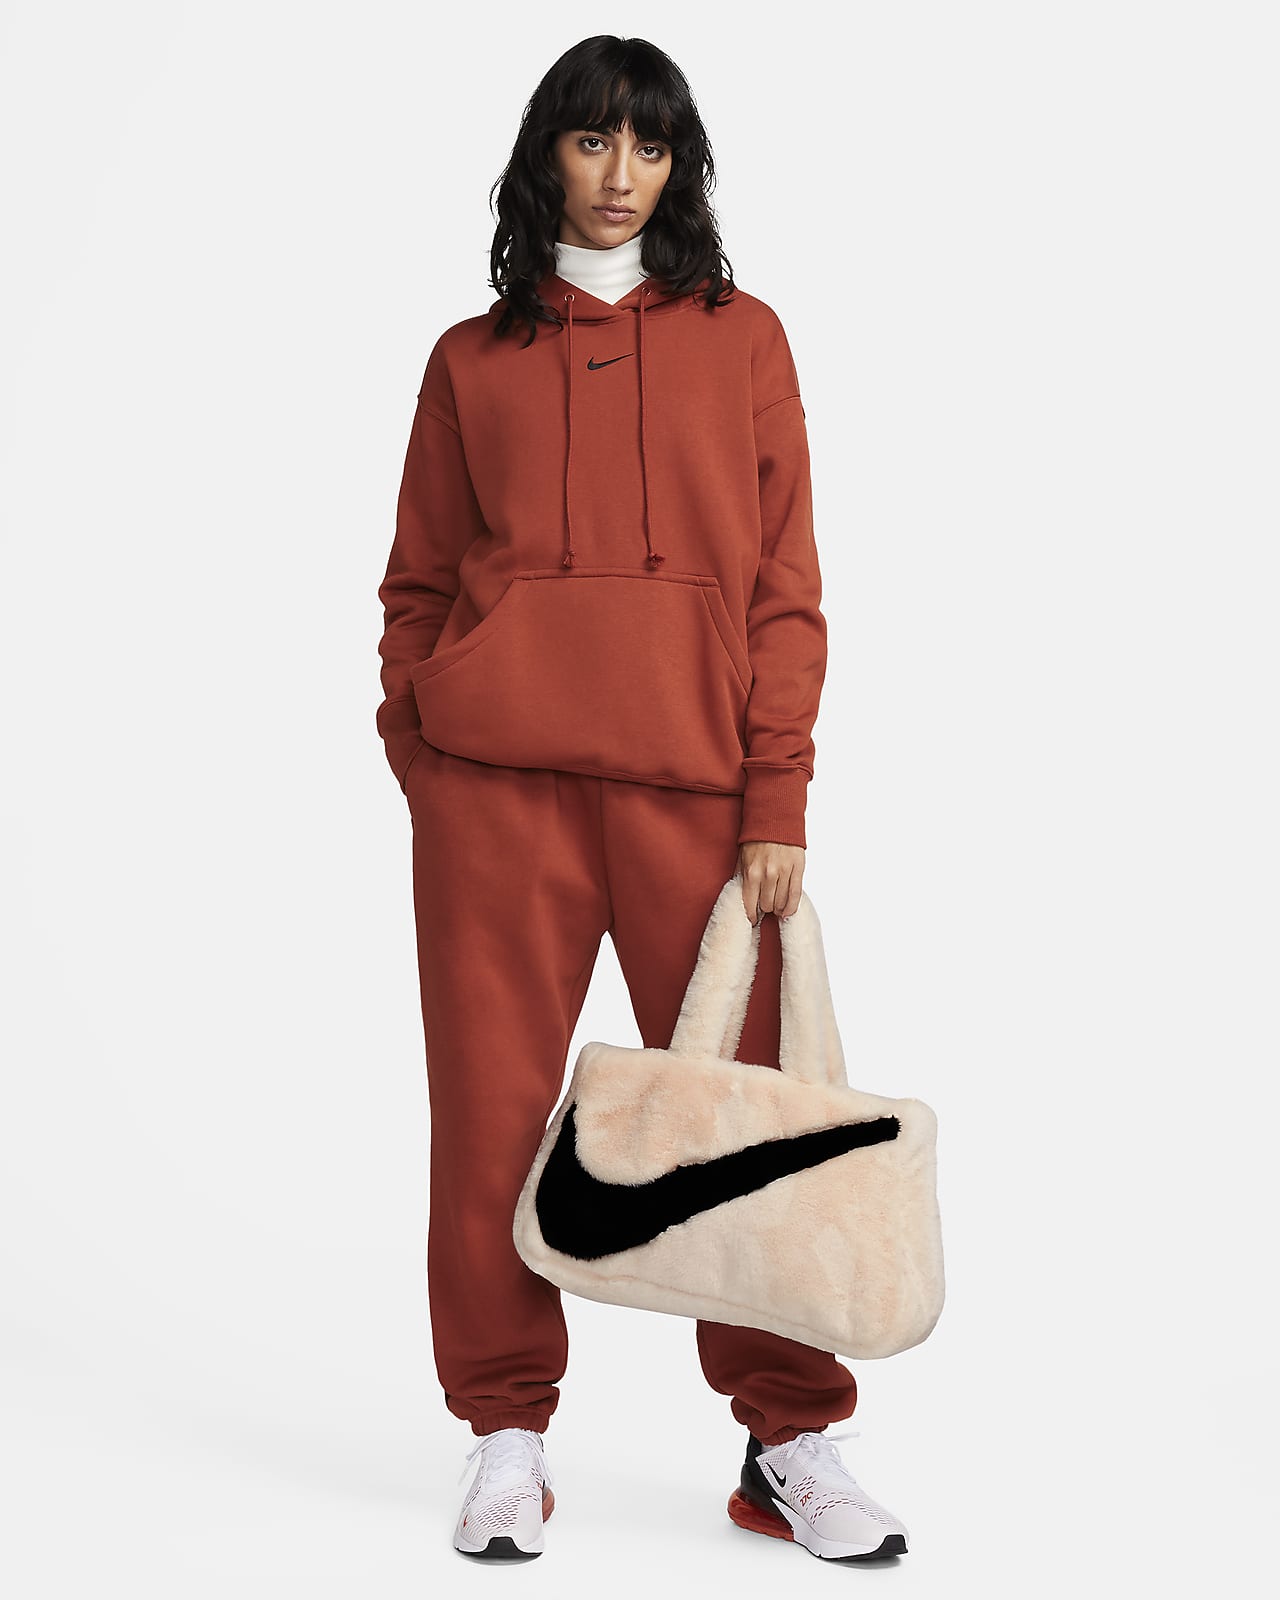 Nike Sportswear Club Adjustable Cap-Fireberry Pink - Hibbett